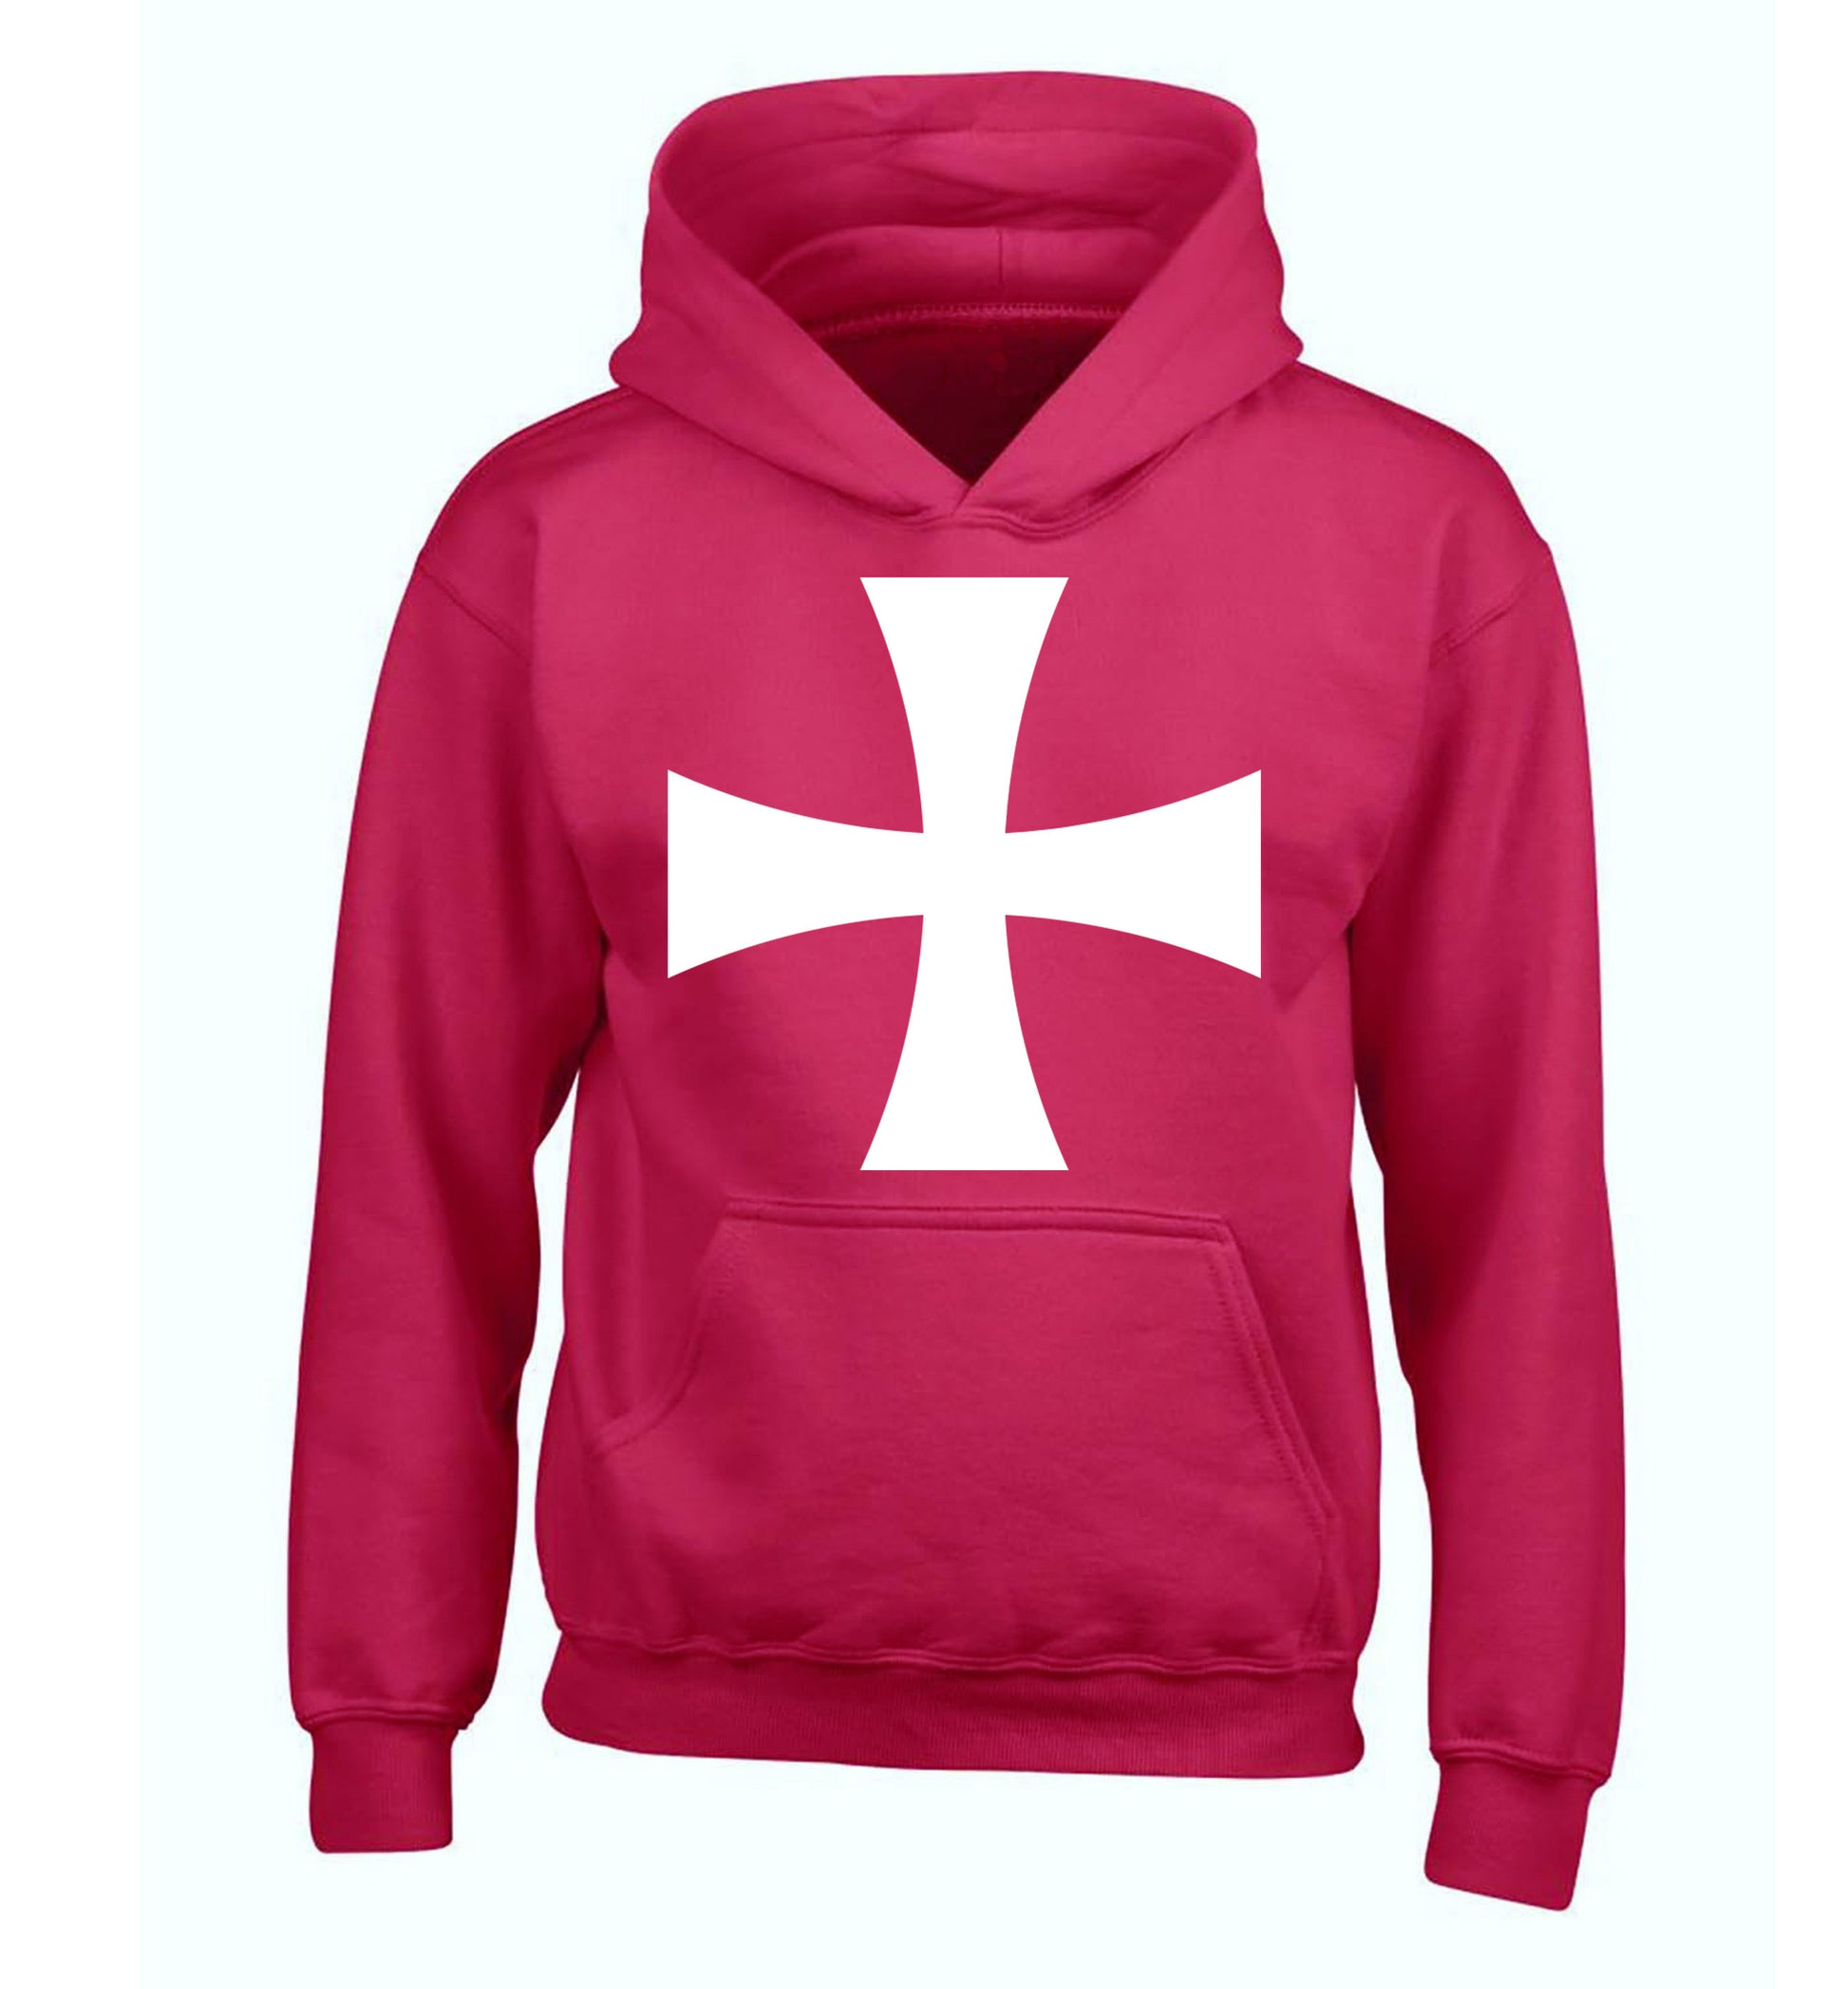 Knights Templar cross children's pink hoodie 12-14 Years